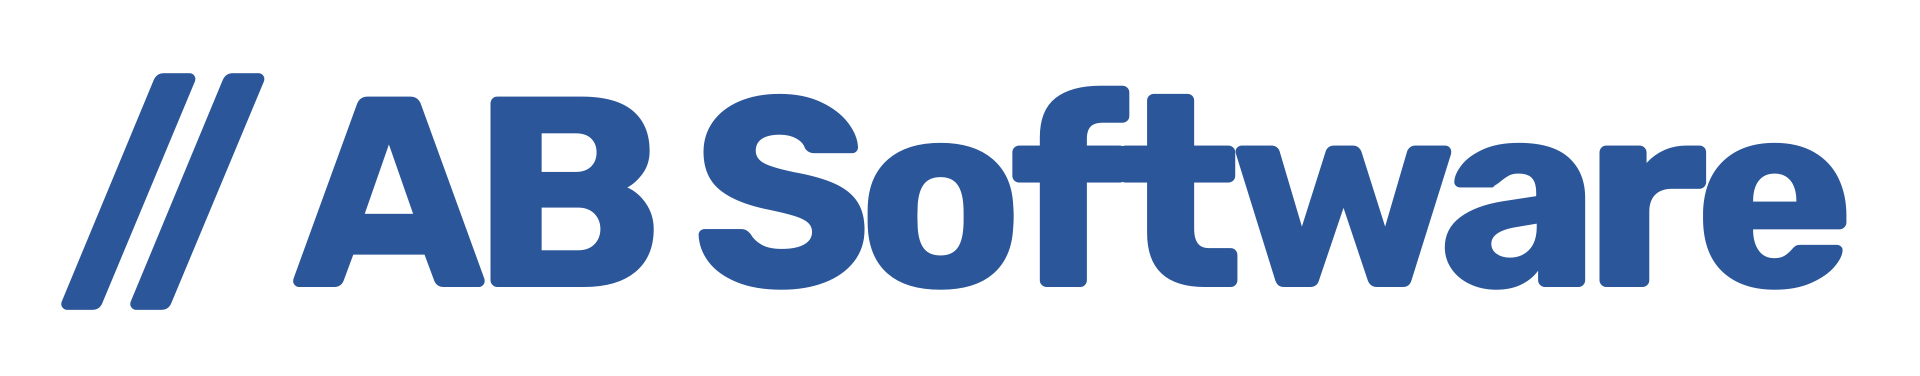 AB Software logo